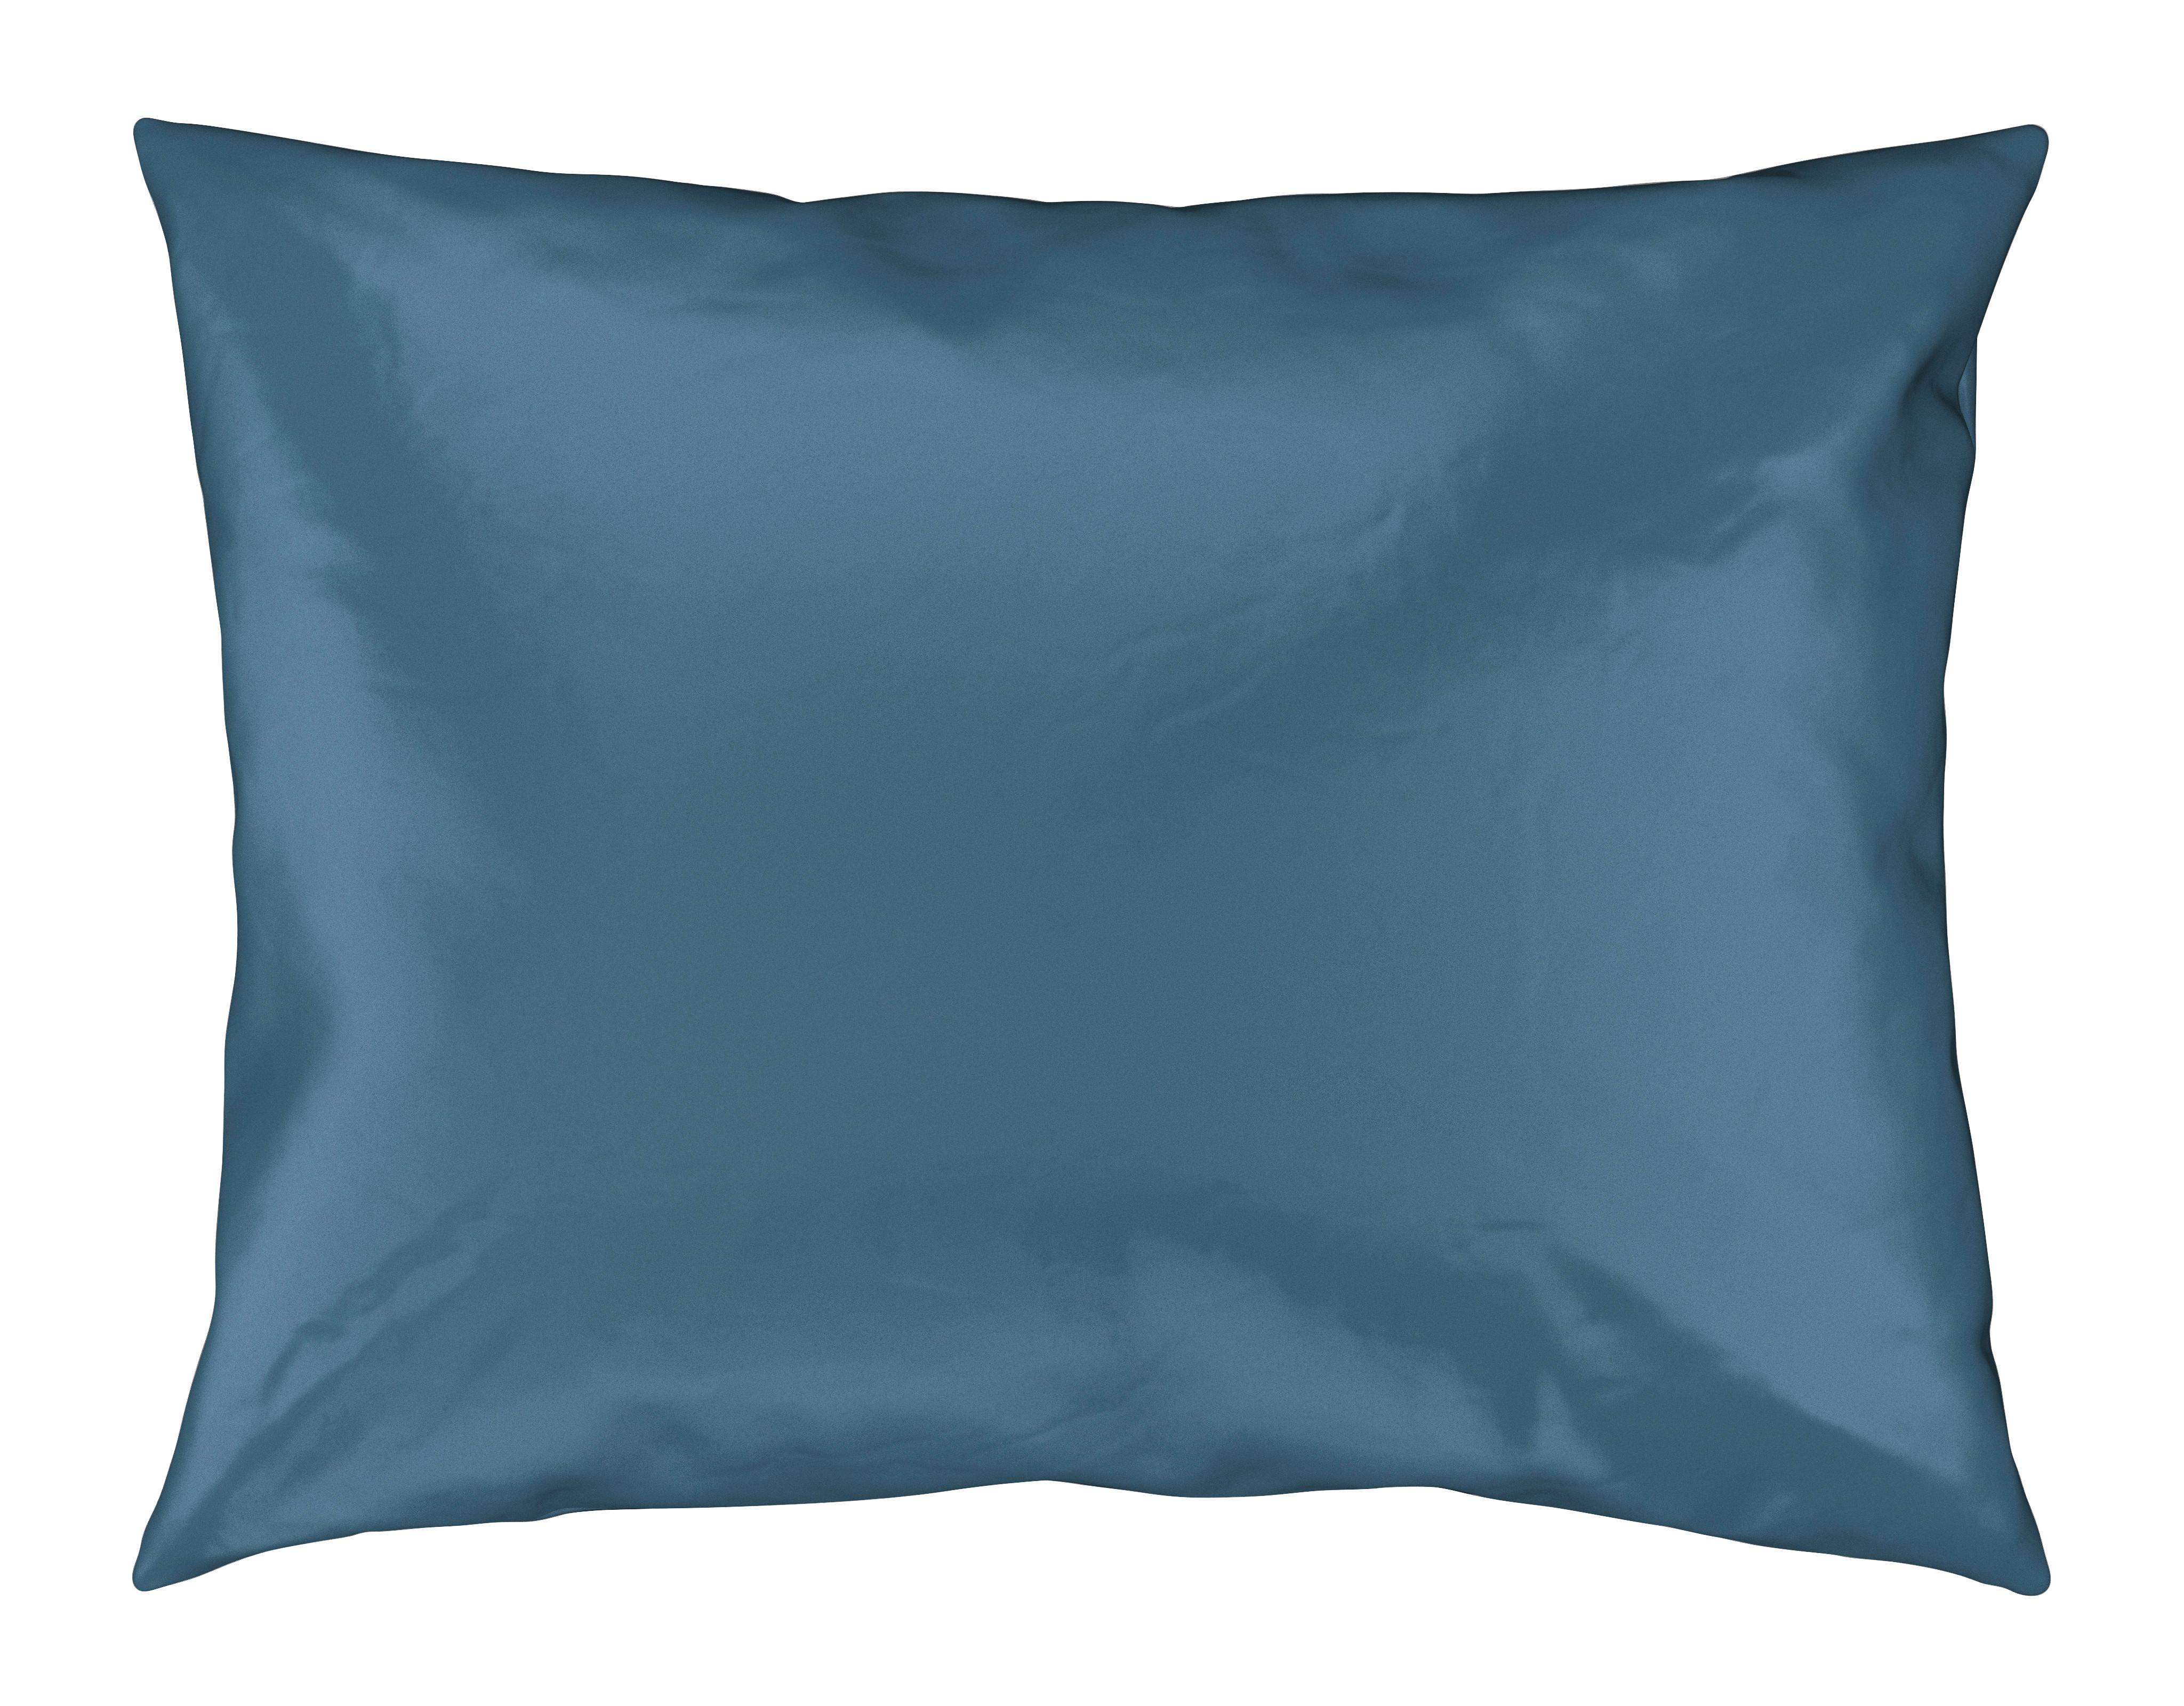 Kissenhülle Alex Uni in Blau ca. 40x60cm - Blau, MODERN, Textil (40/60cm) - Premium Living